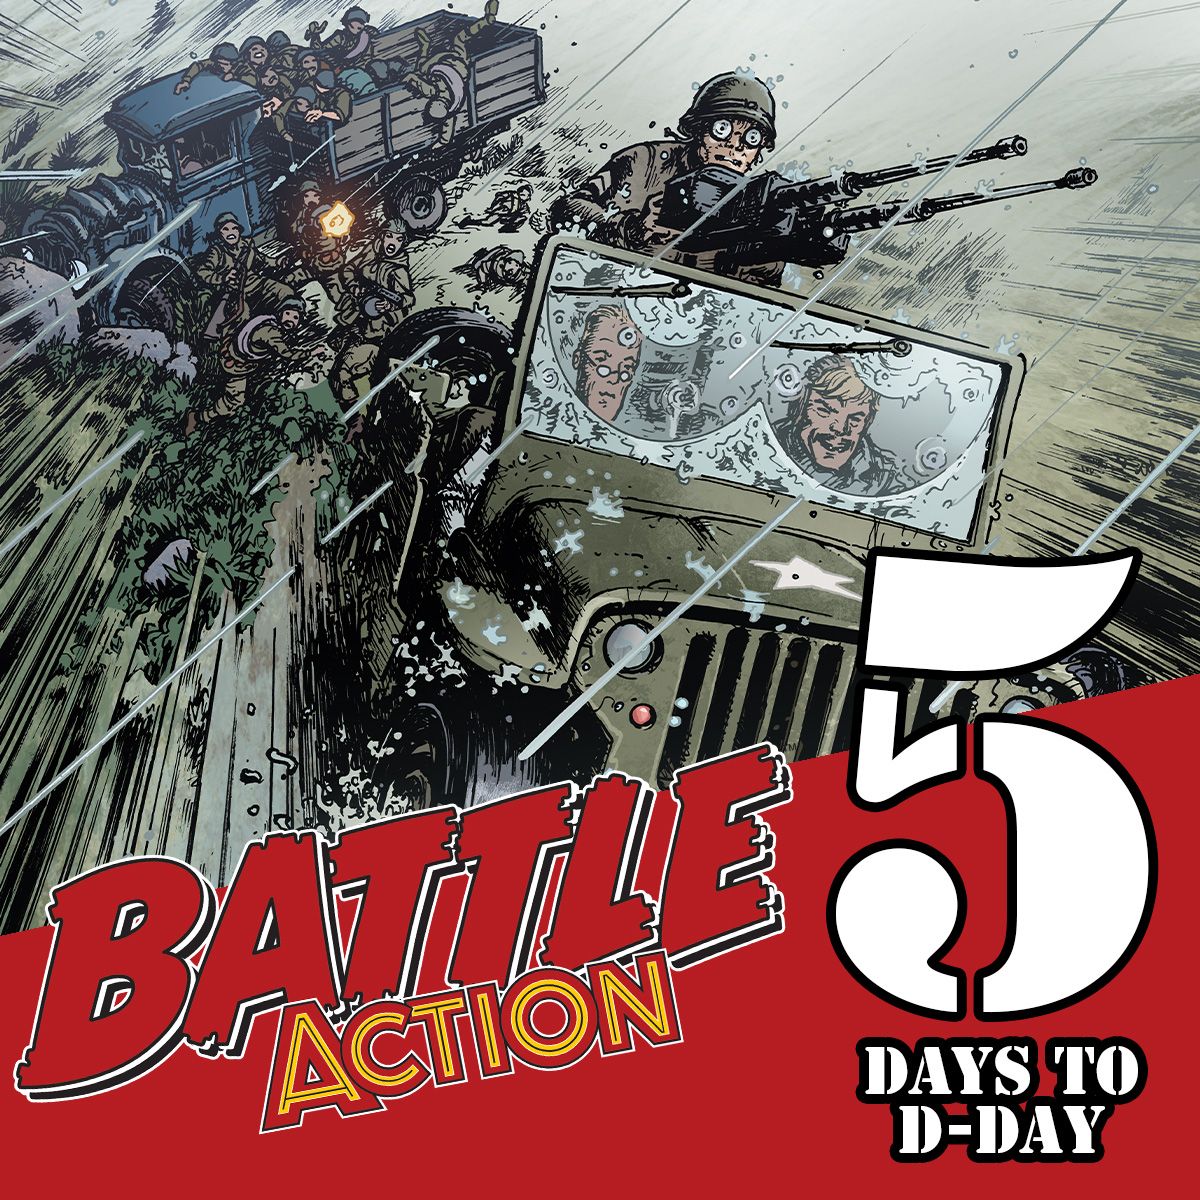 5 Days to Battle Action: meet Crazy Keller!